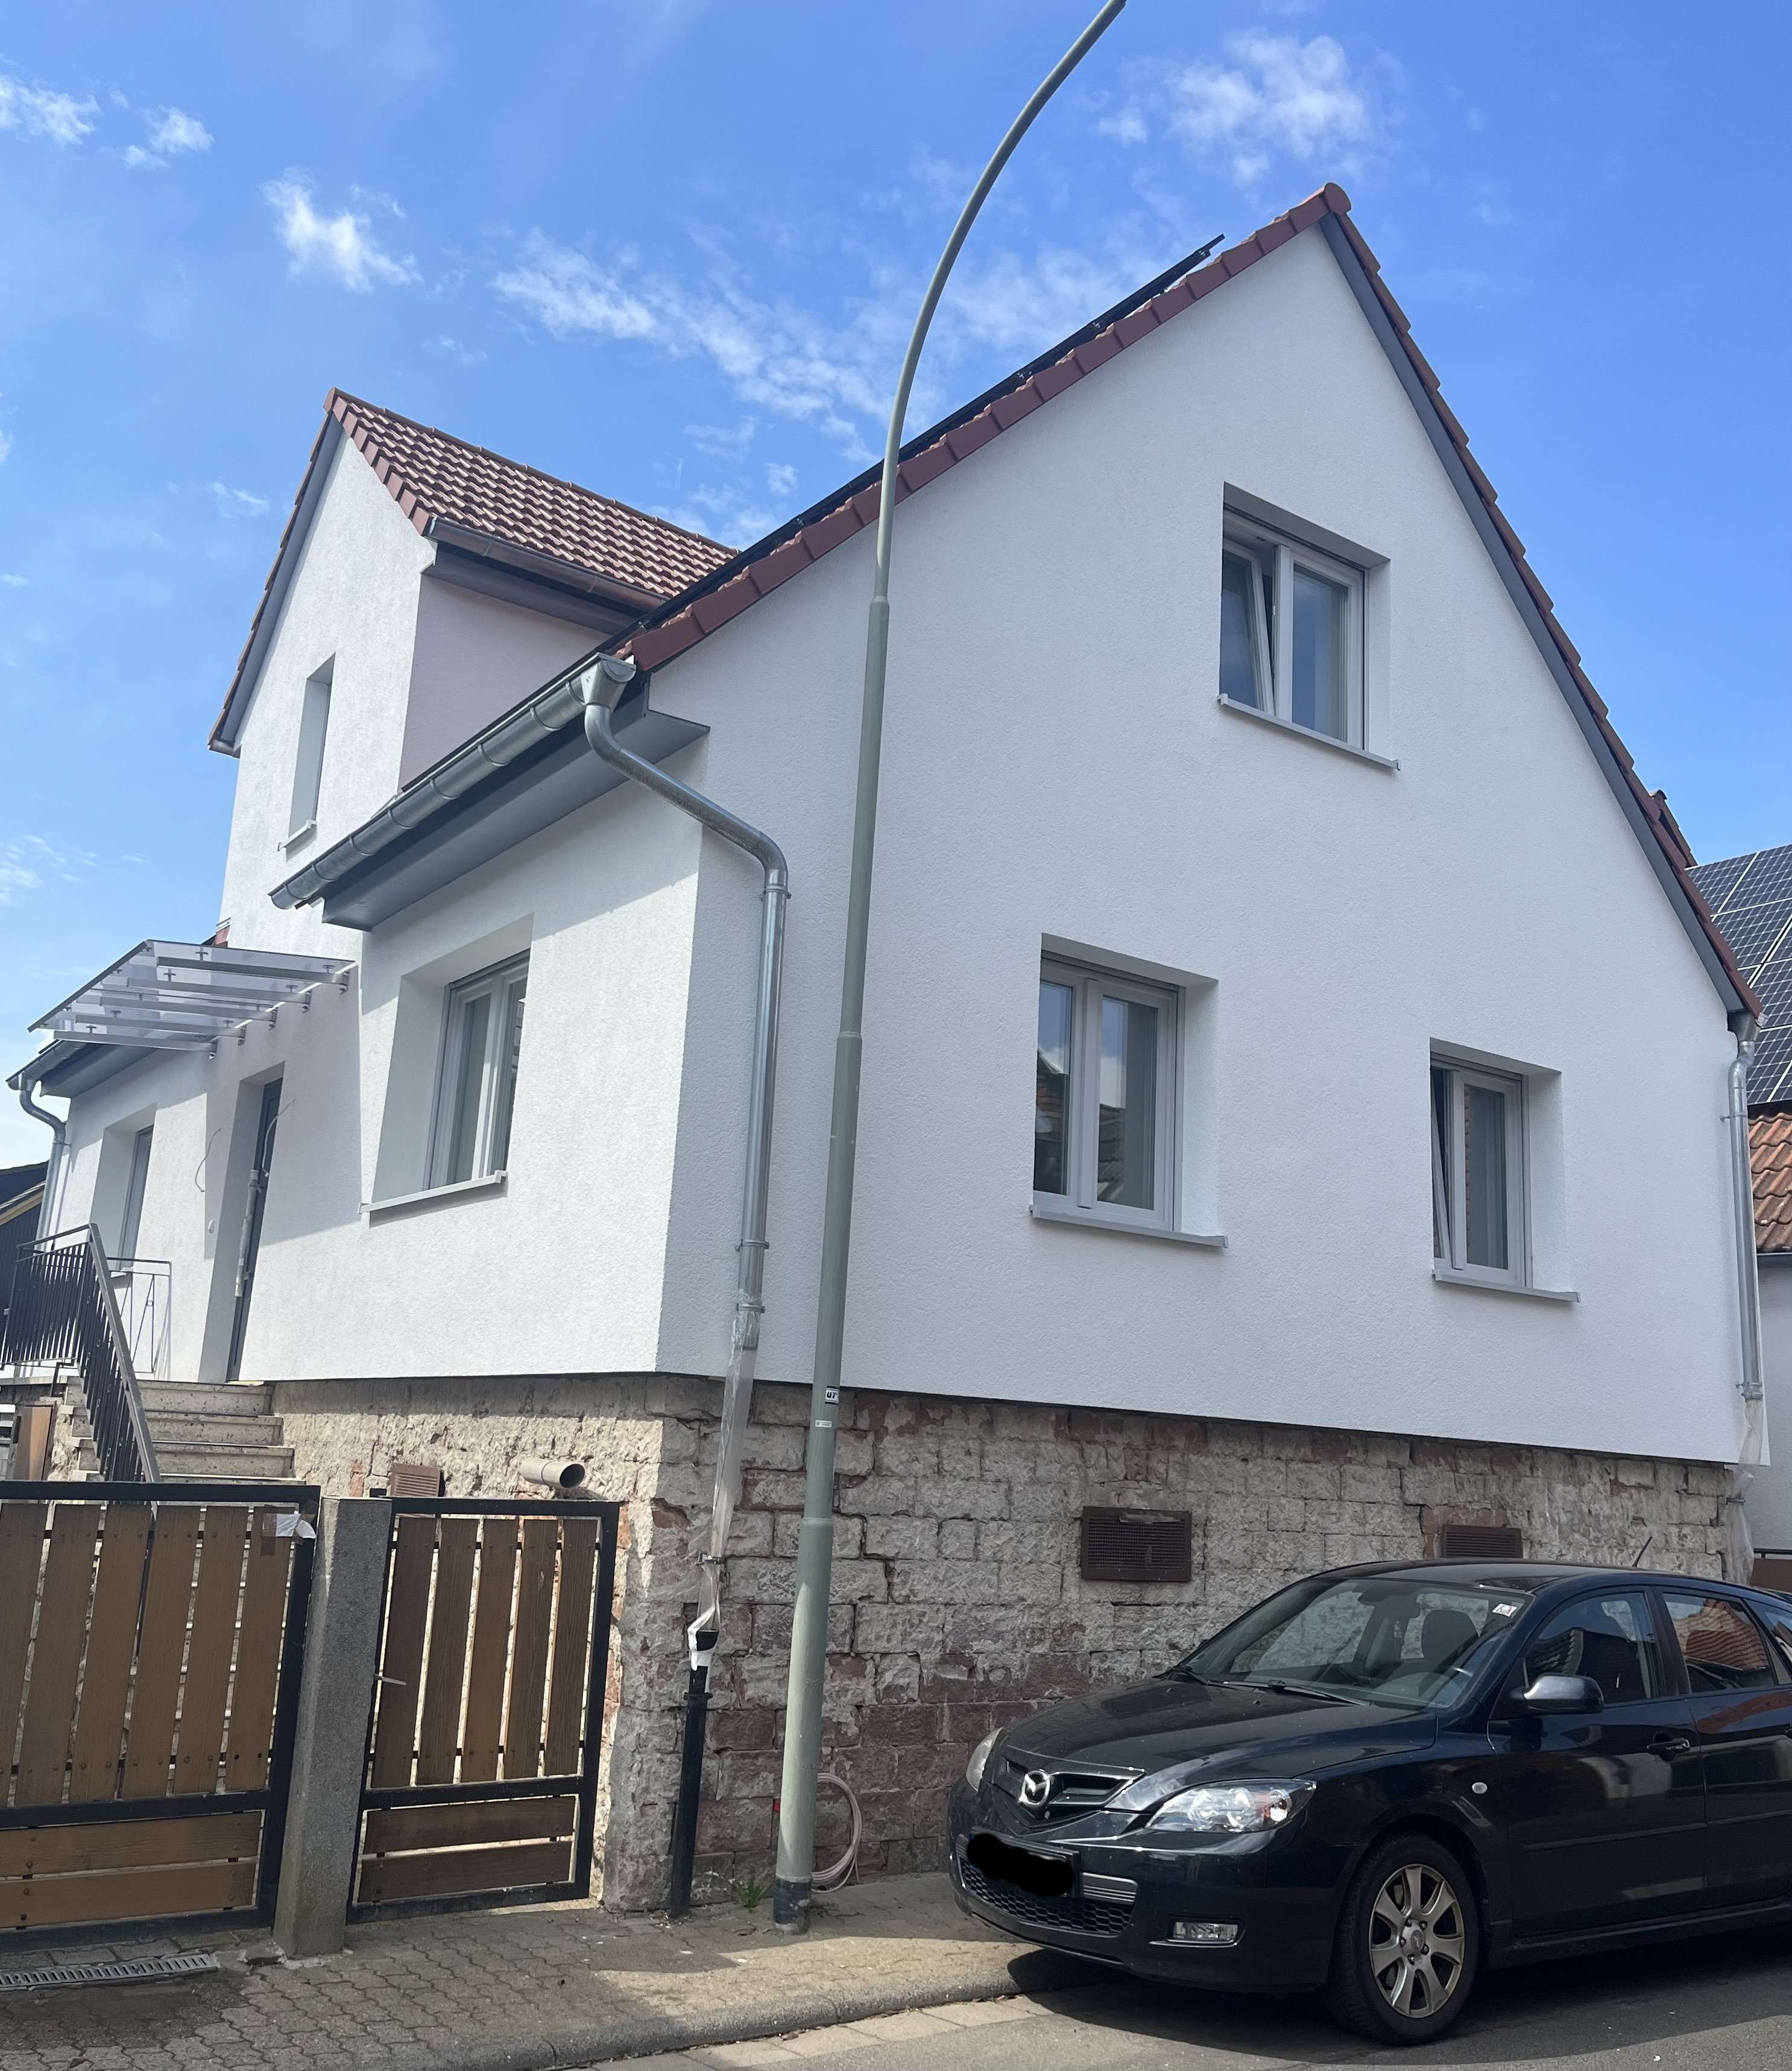 Haus zum Mieten in Büdingen 1.300,00 € 131 m²